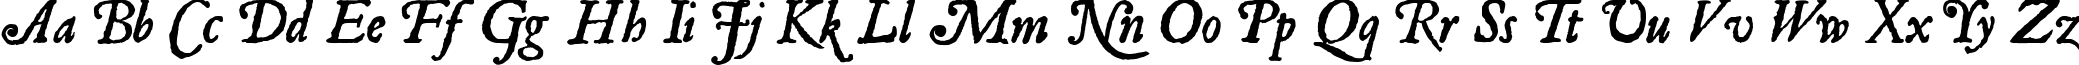 Пример написания английского алфавита шрифтом JSL Ancient Italic